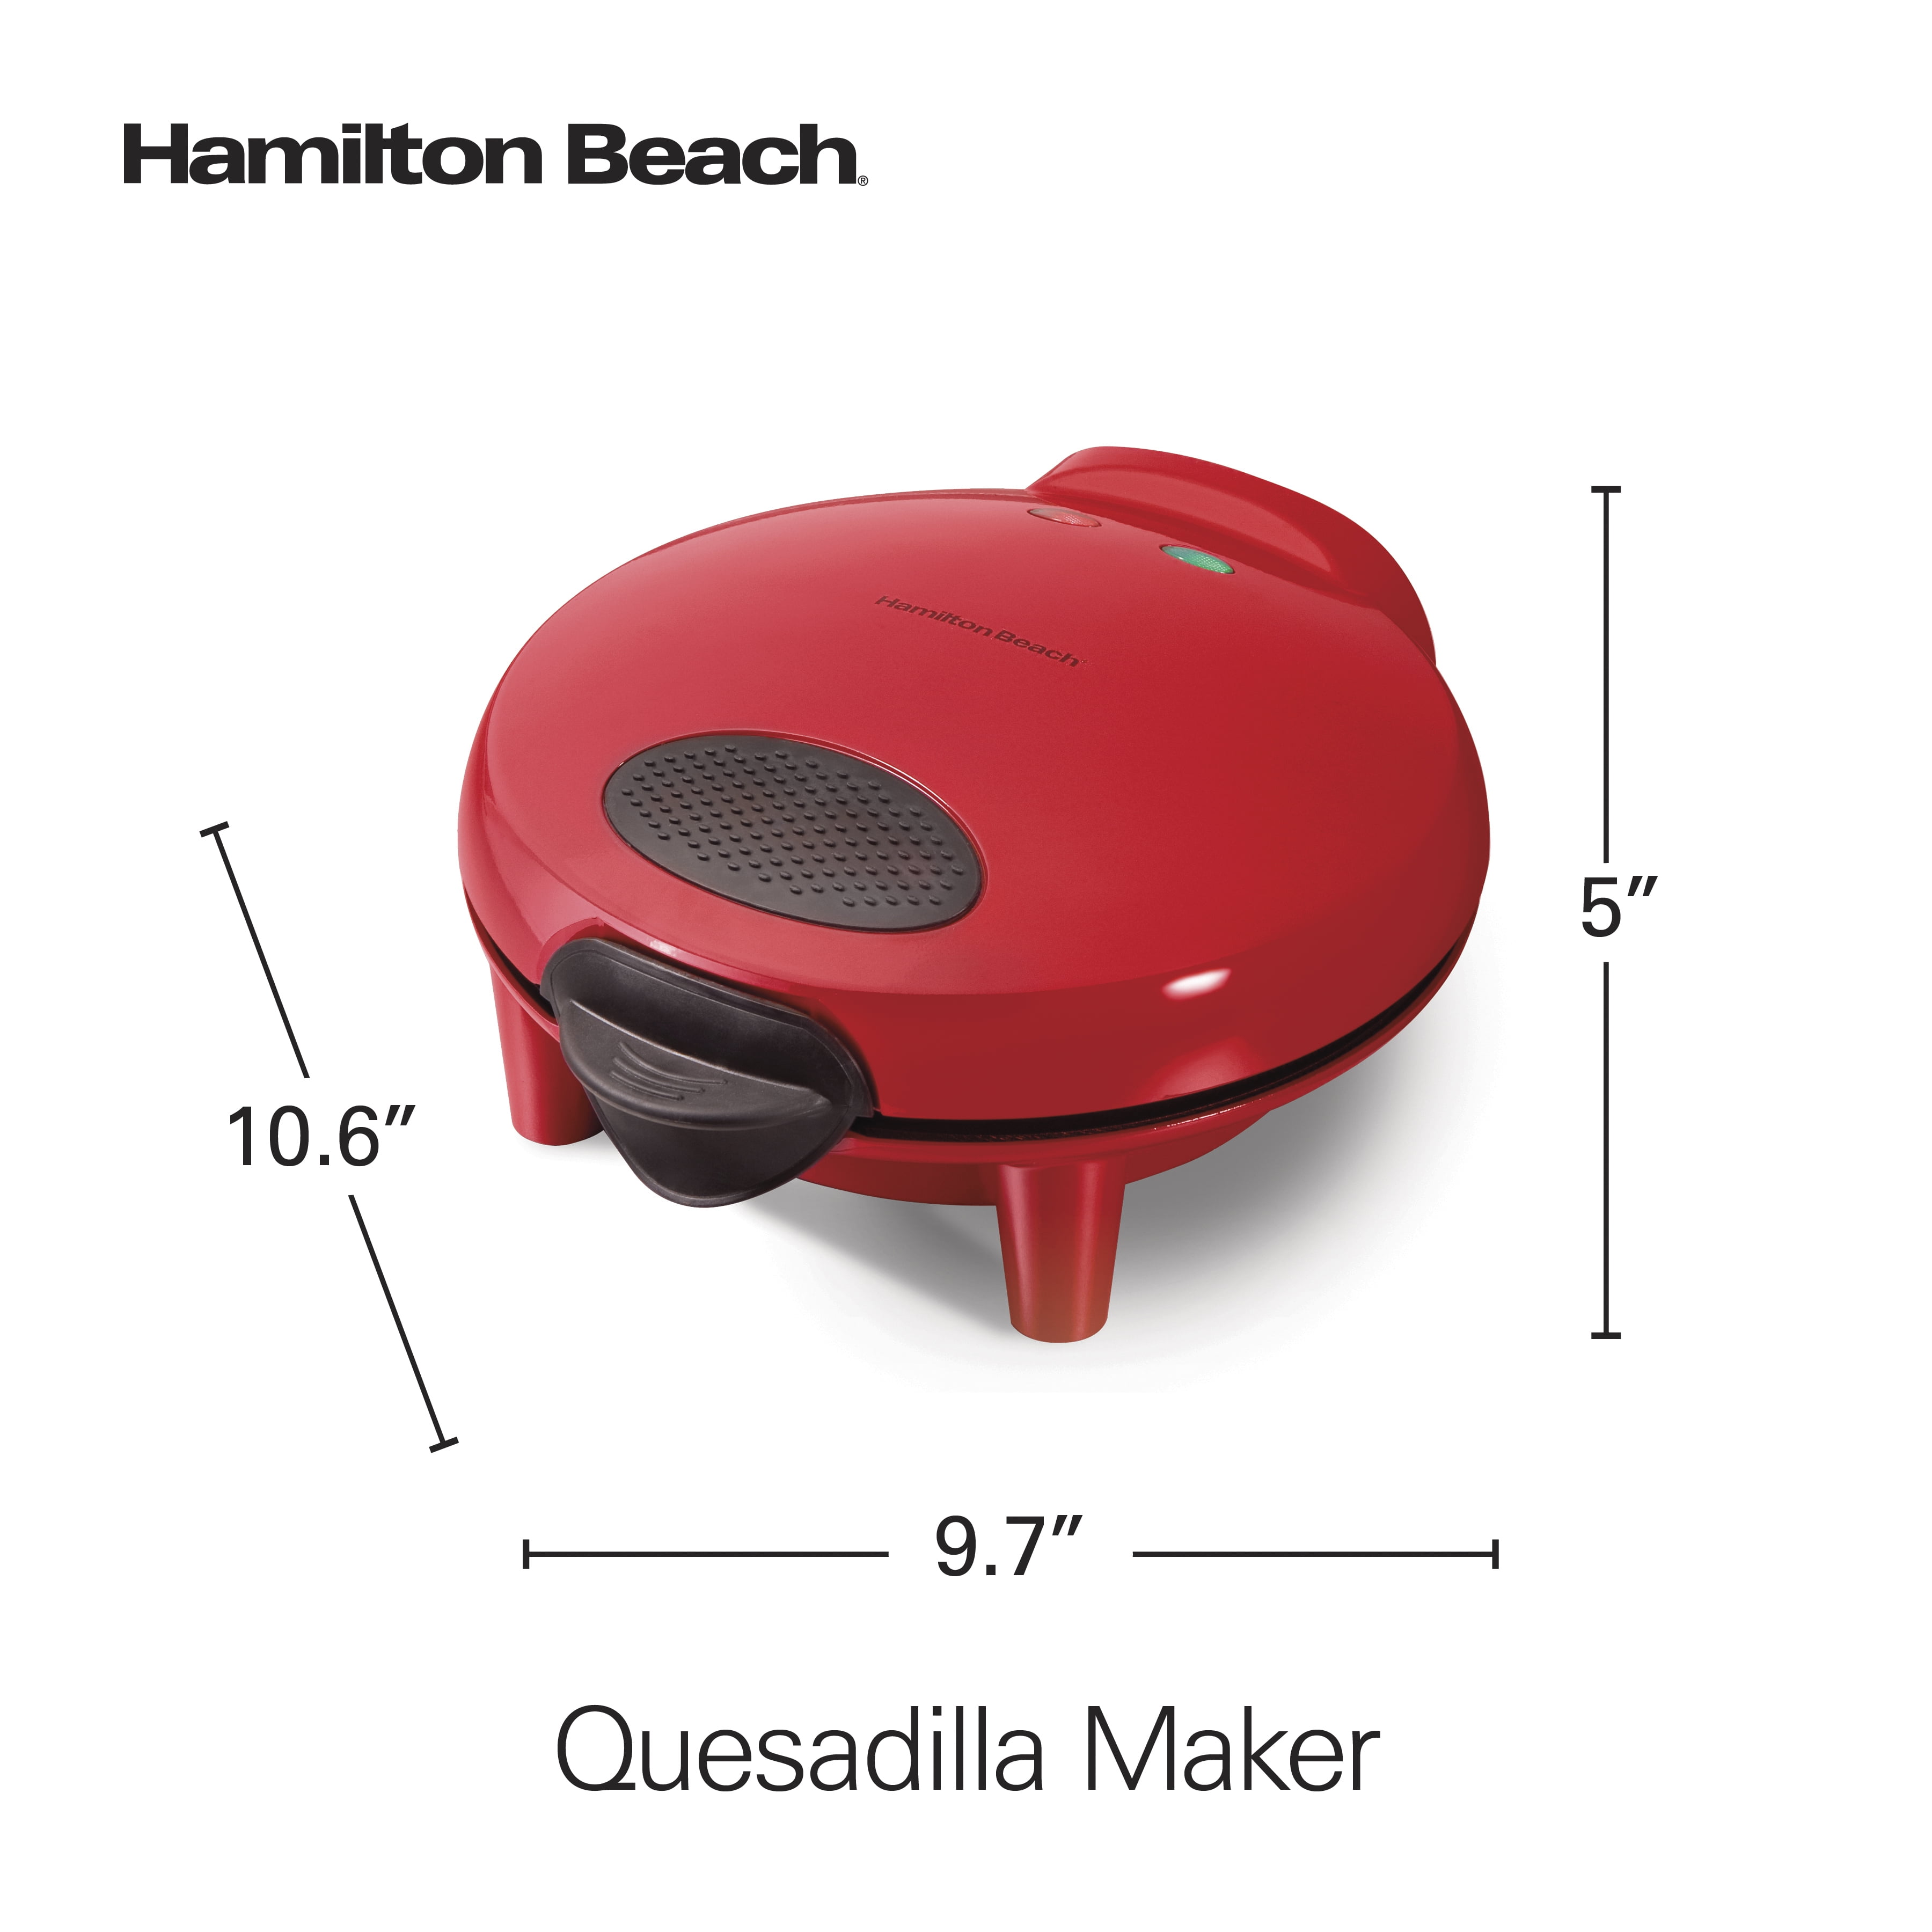 Hamilton Beach Quesadilla Maker, 8 Round, Makes 6 Wedges, Red, 25409